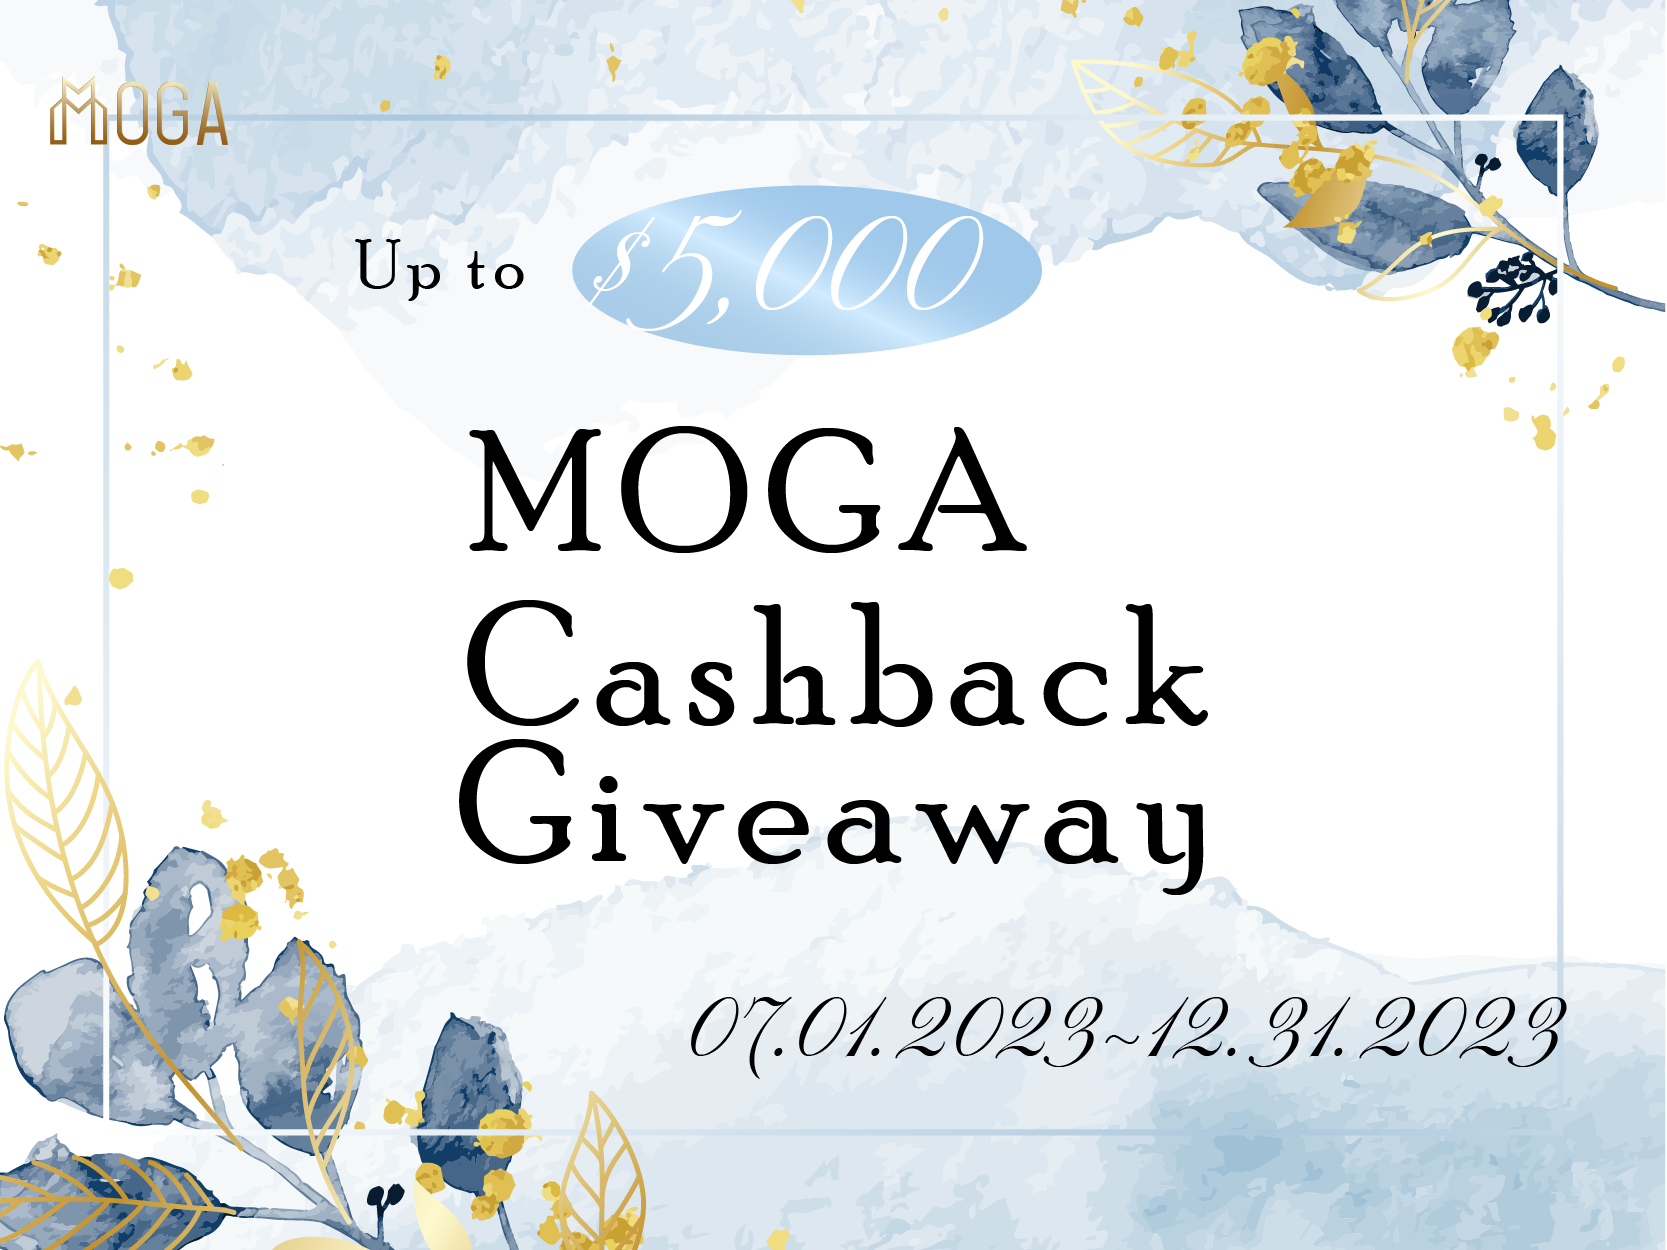 MOGA Winter Cashback Giveaway Up to $5,000